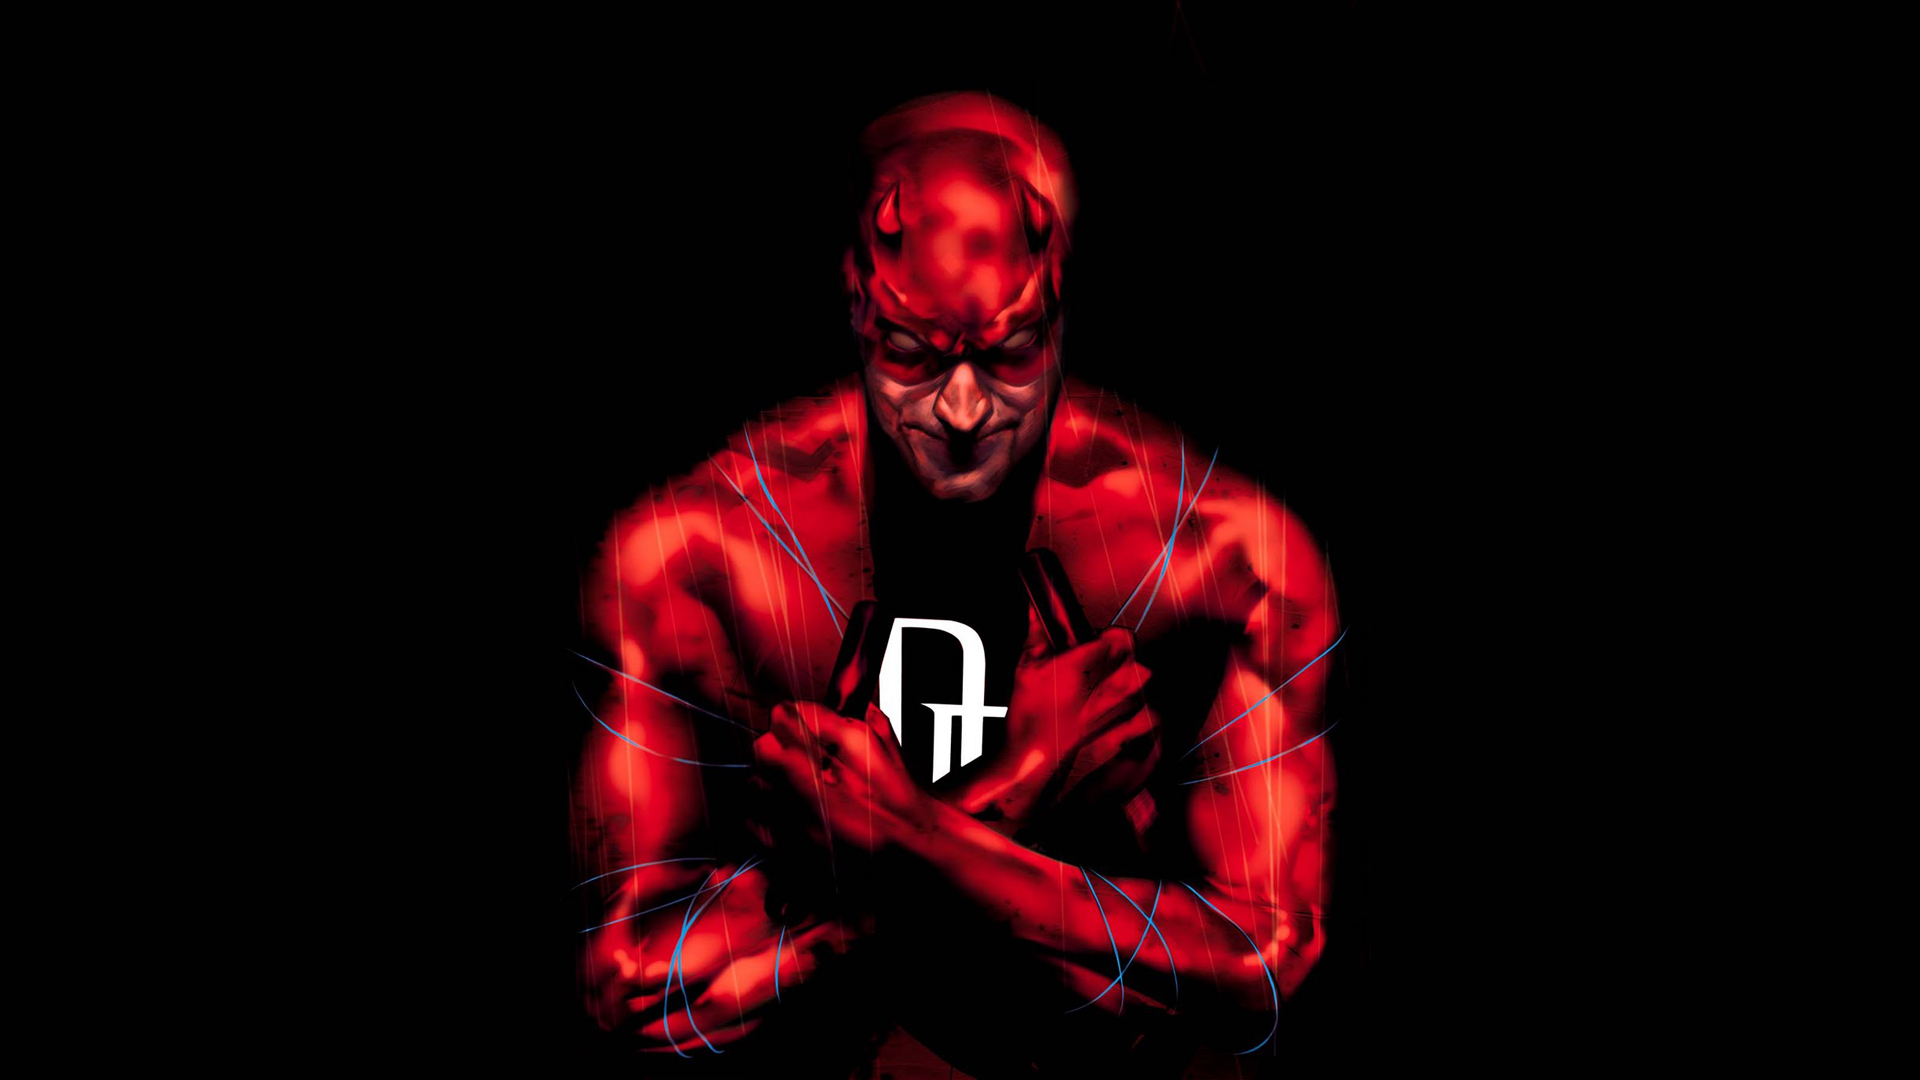 Daredevil Puter Wallpaper Desktop Background Id